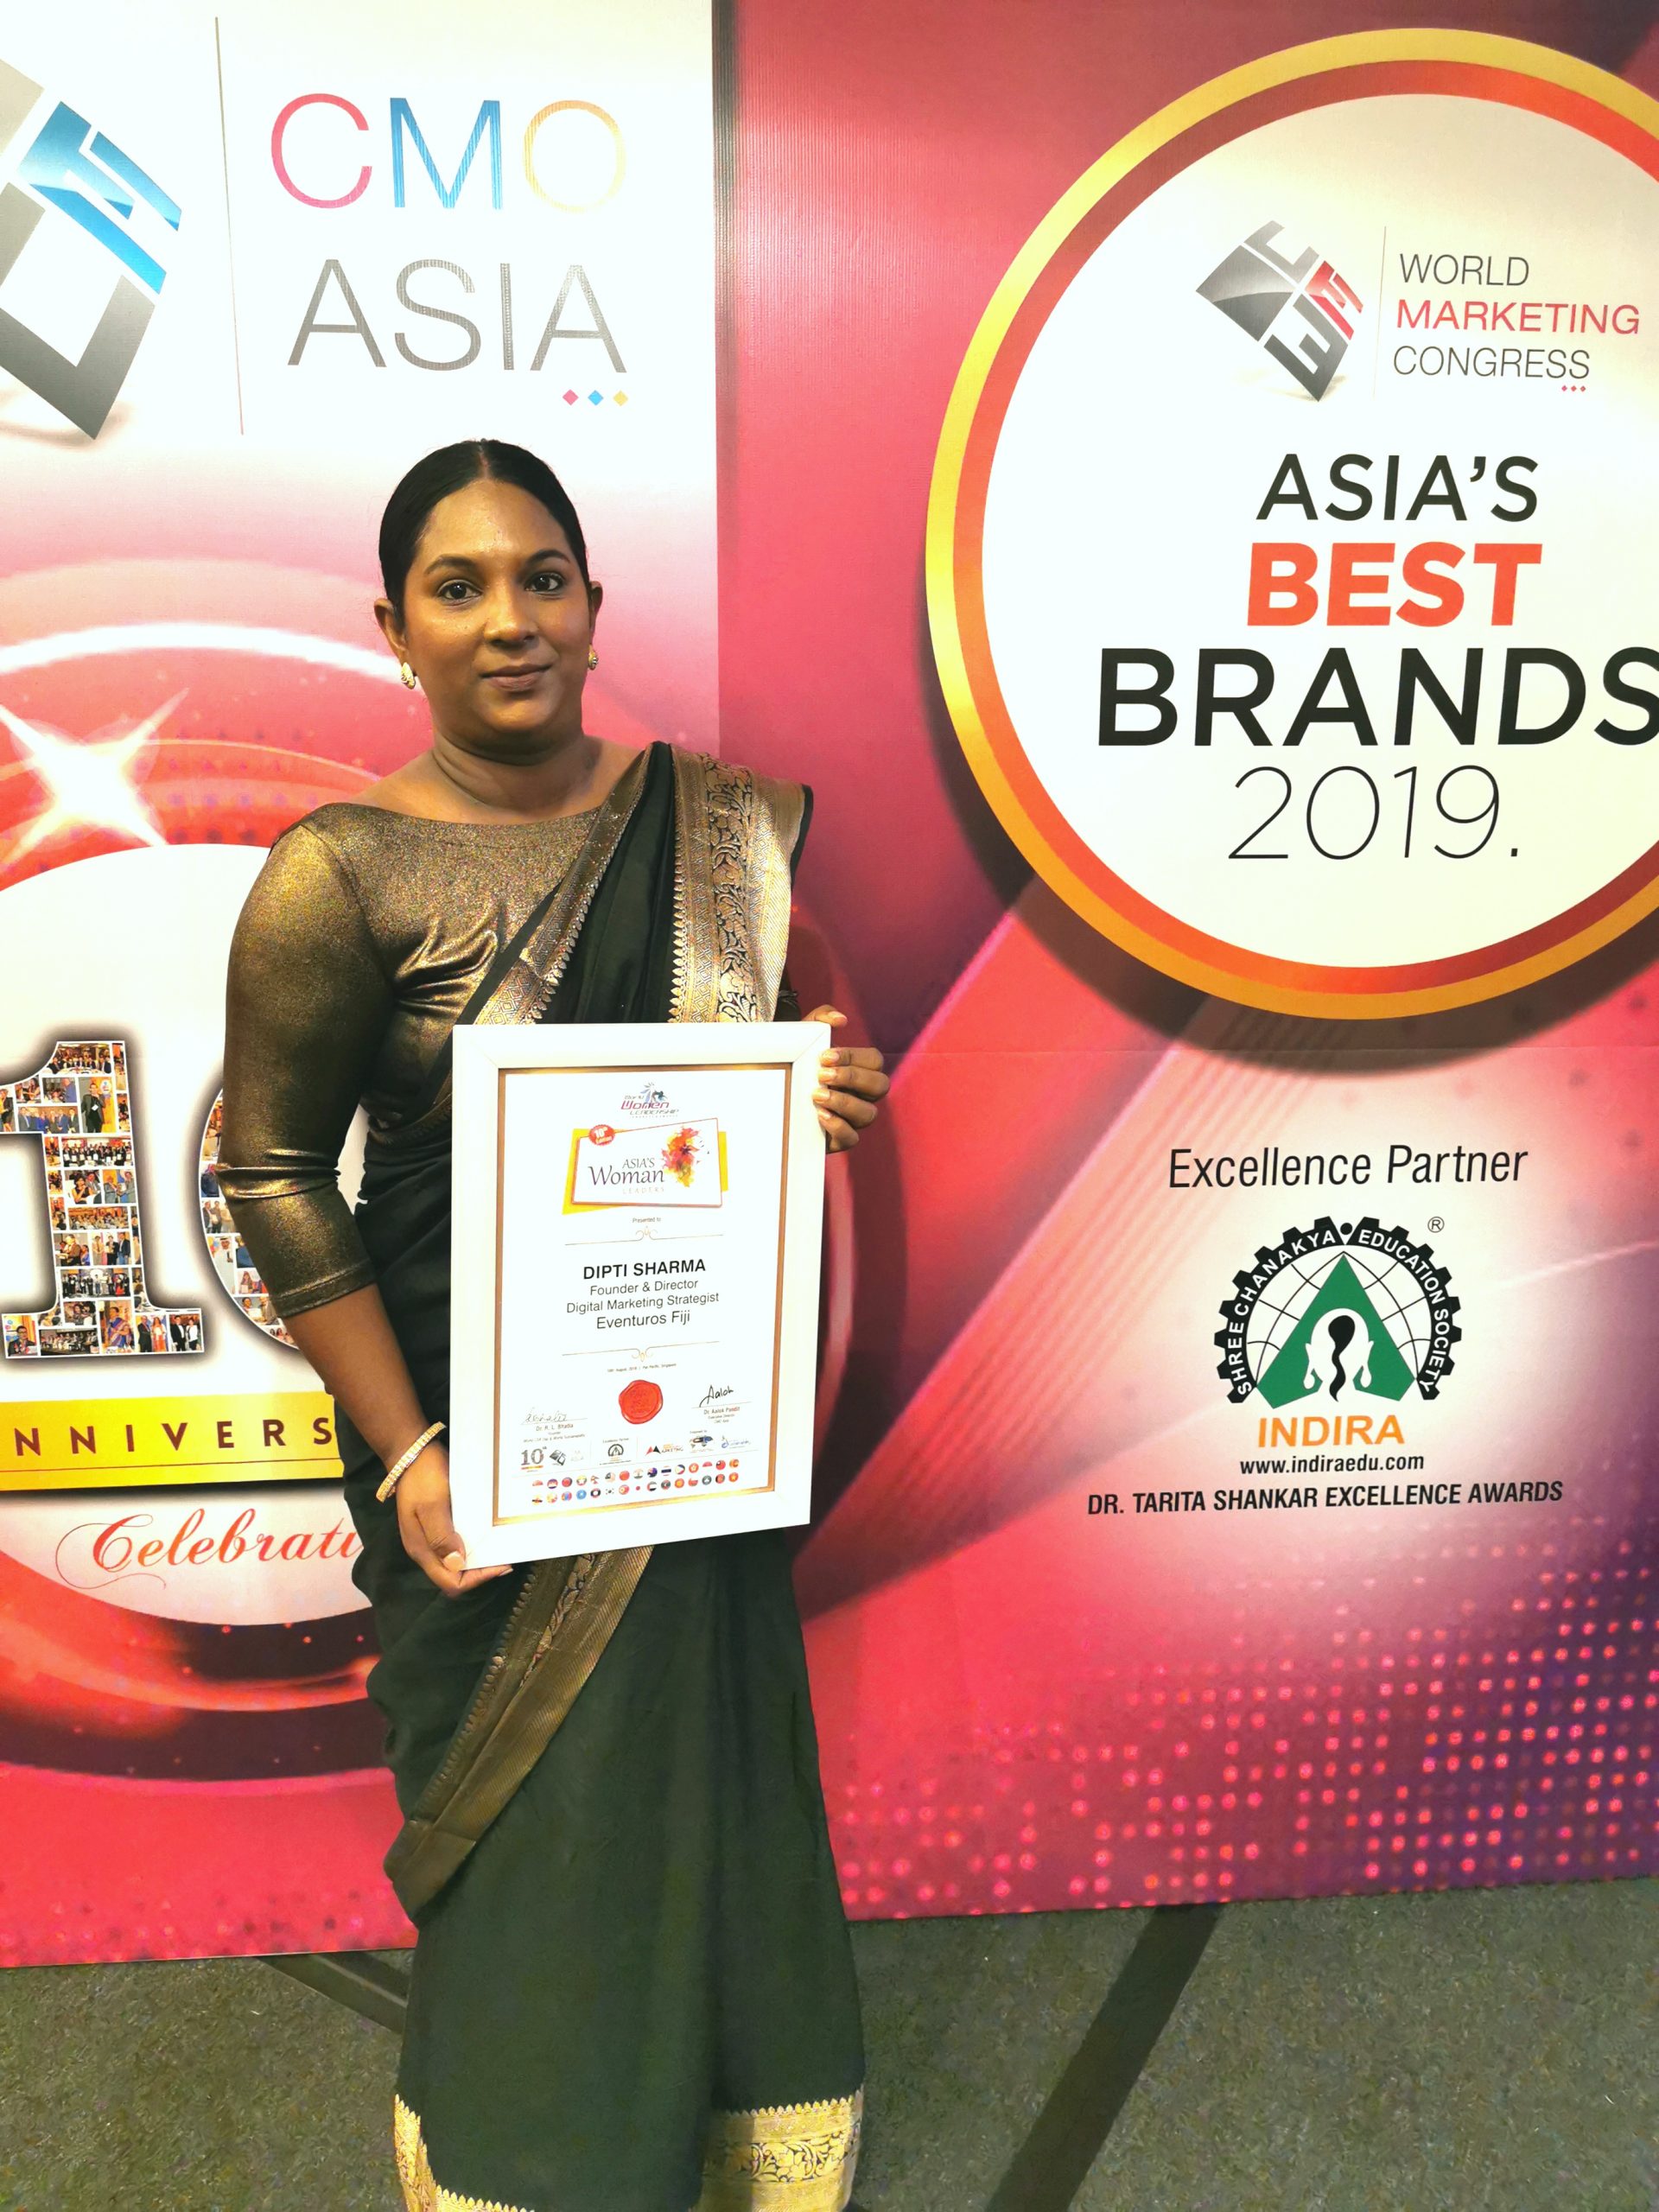 An Indian woman is receiving an award for Asia's Best Brands 2019